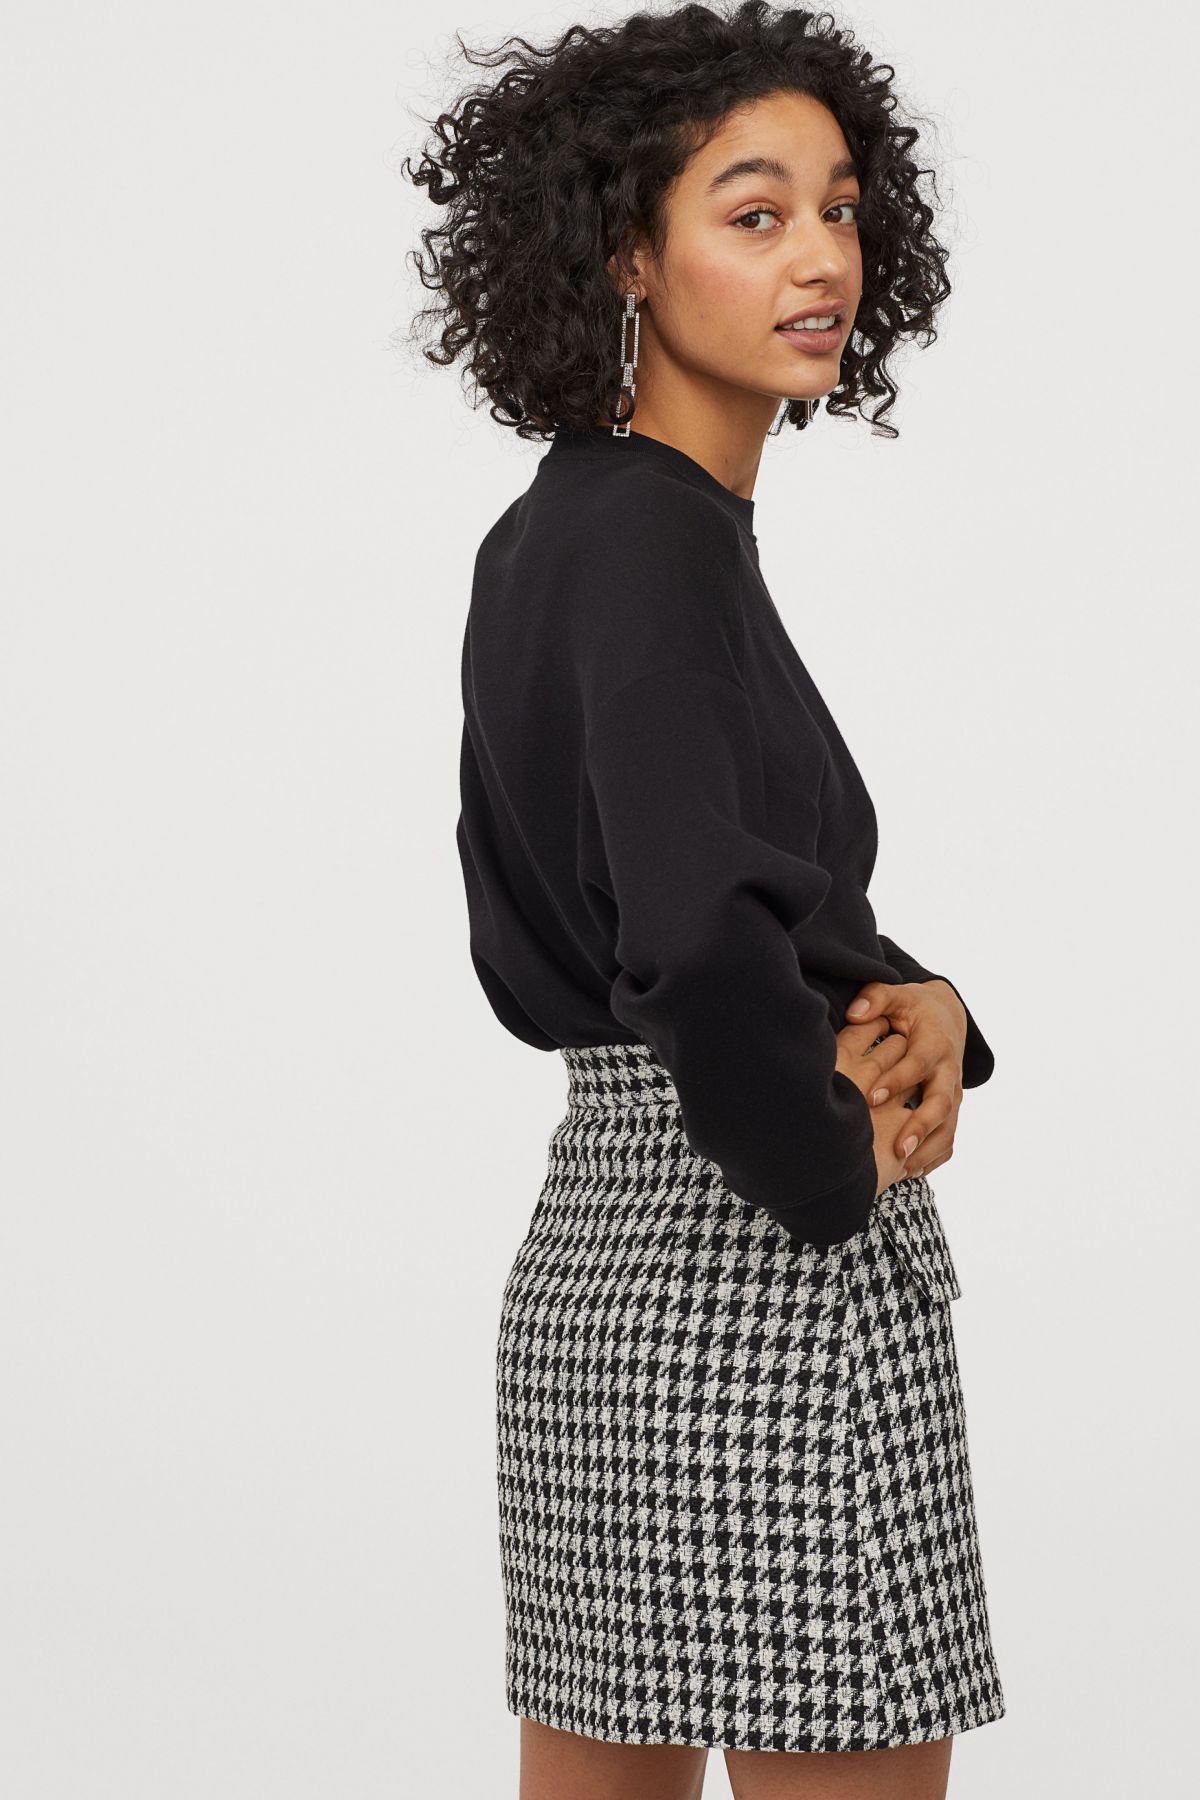 DAMARIS GODDRIE for H&M, December 2019 – HawtCelebs